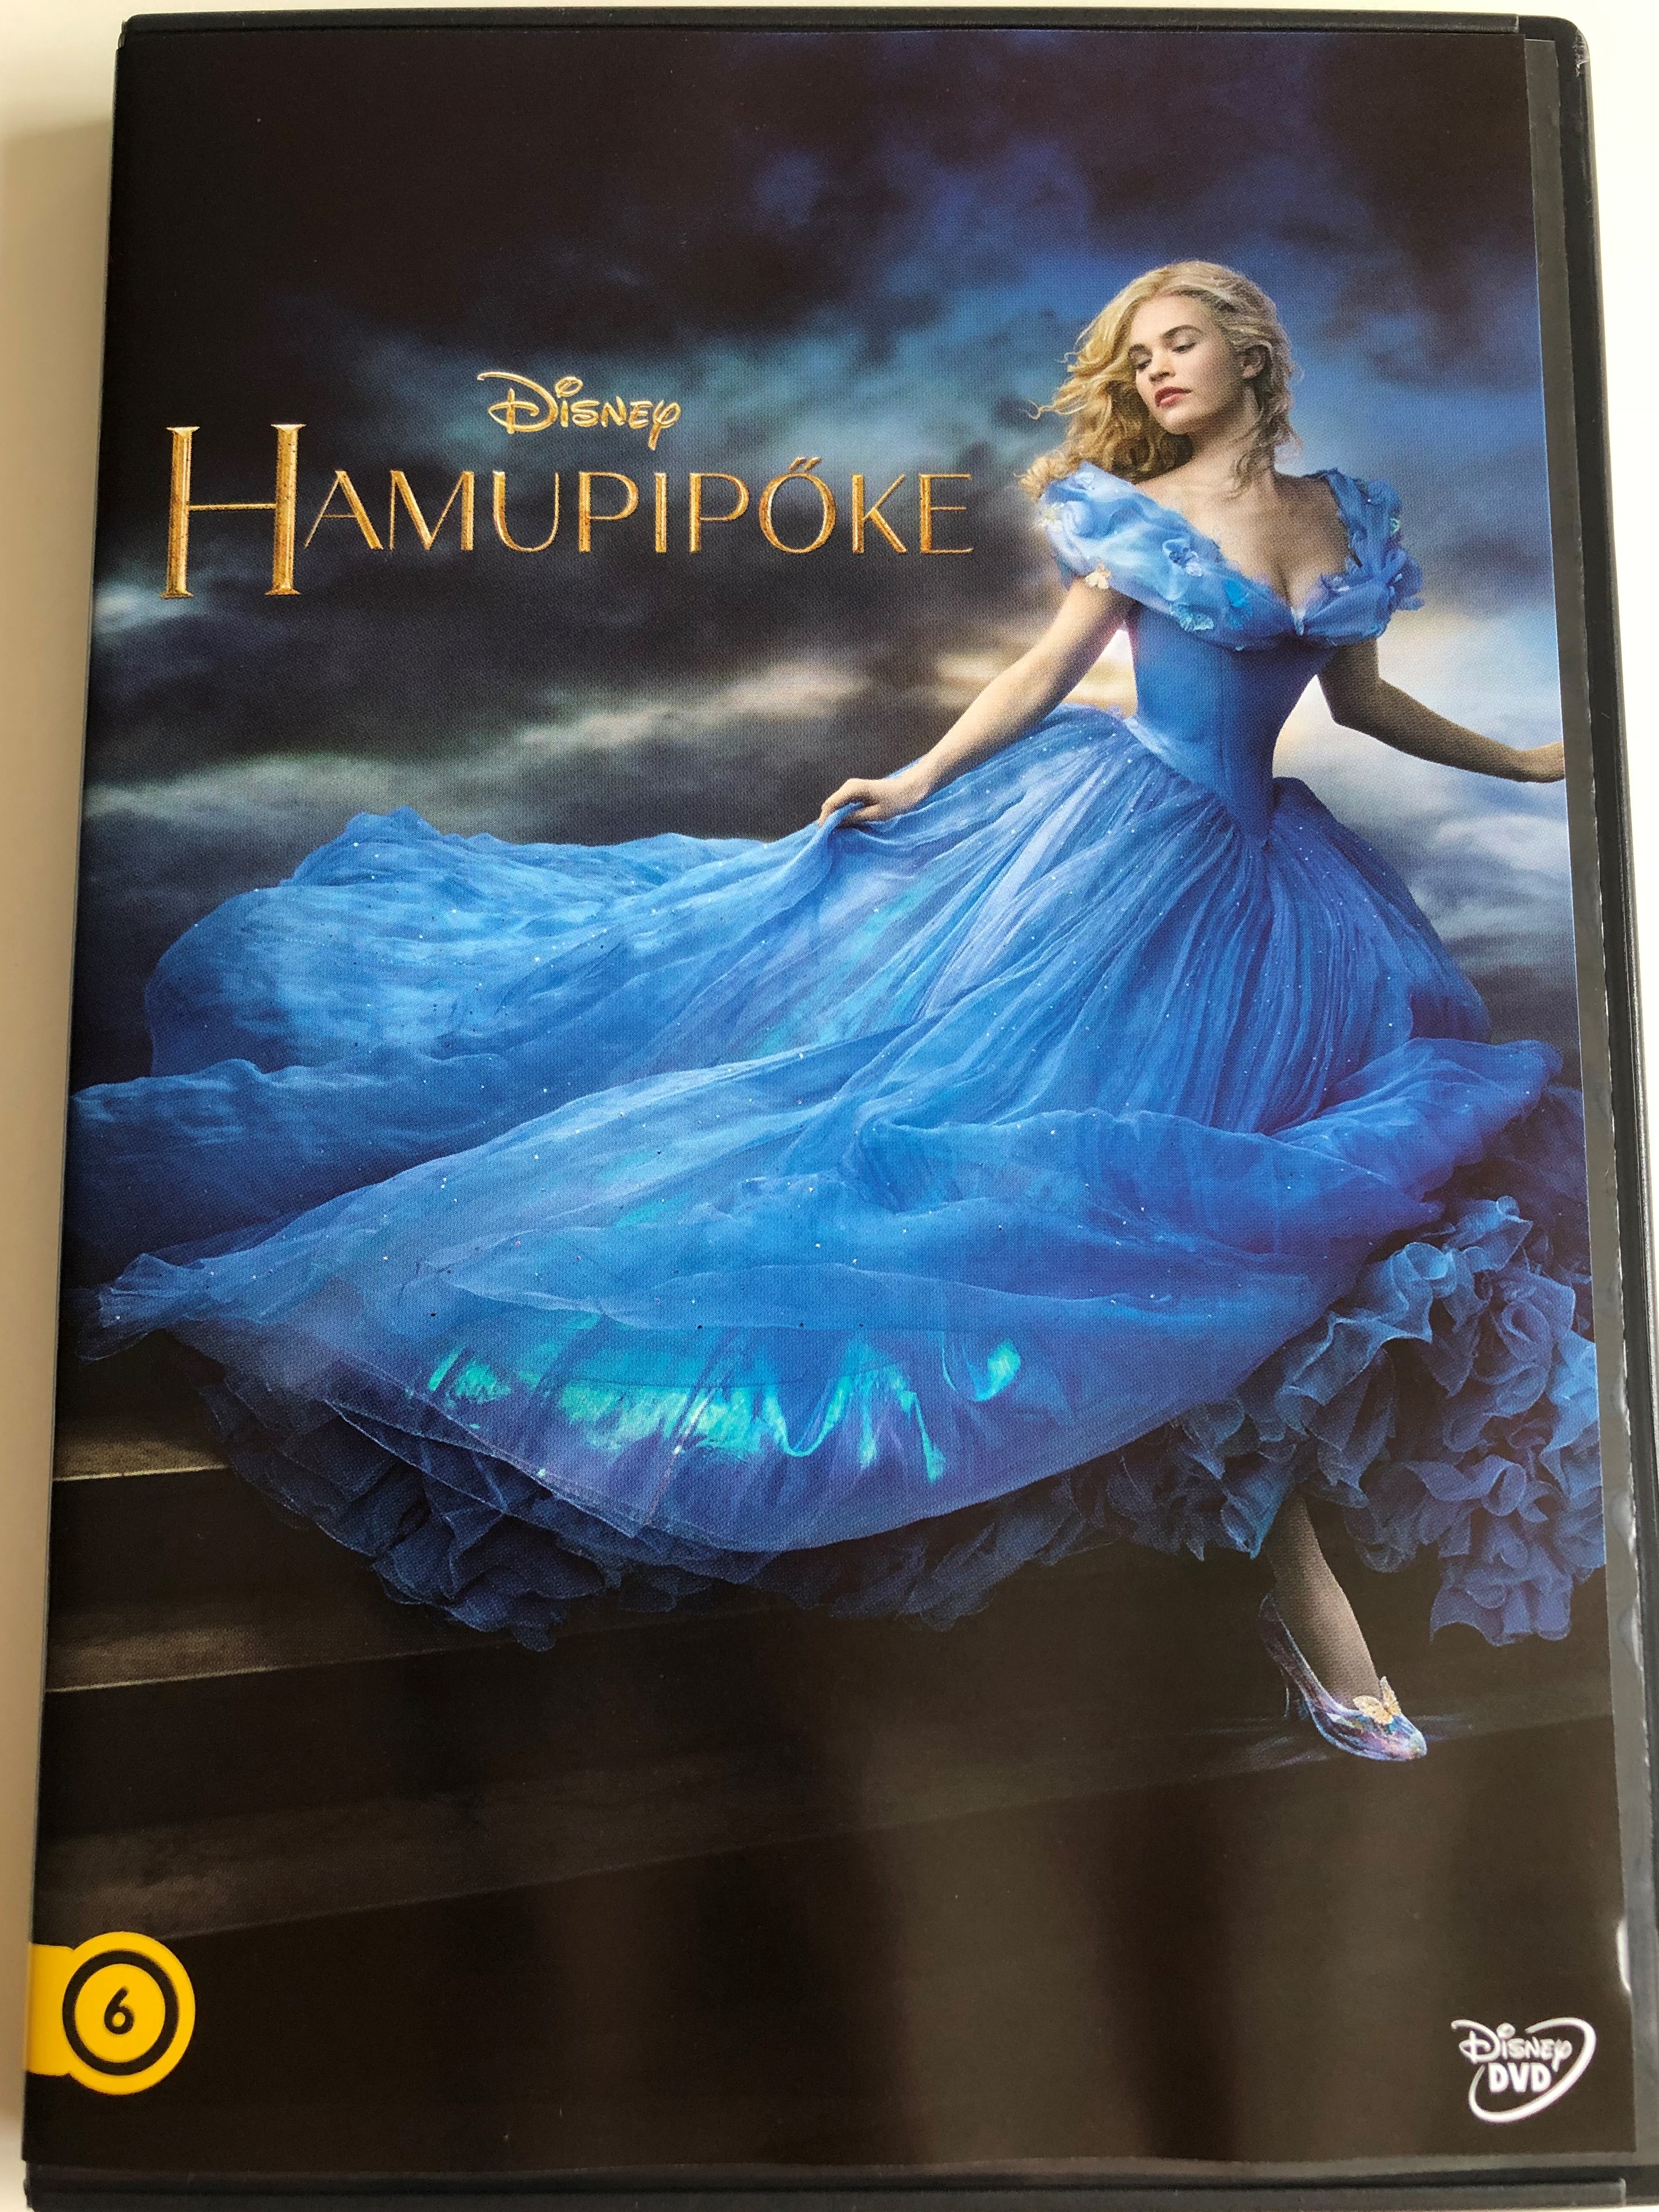 cinderella-dvd-2015-hamupip-ke-directed-by-kenneth-branagh-starring-cate-blanchett-lily-james-richard-madden-stellan-skarsgard-holliday-grainger-1-.jpg